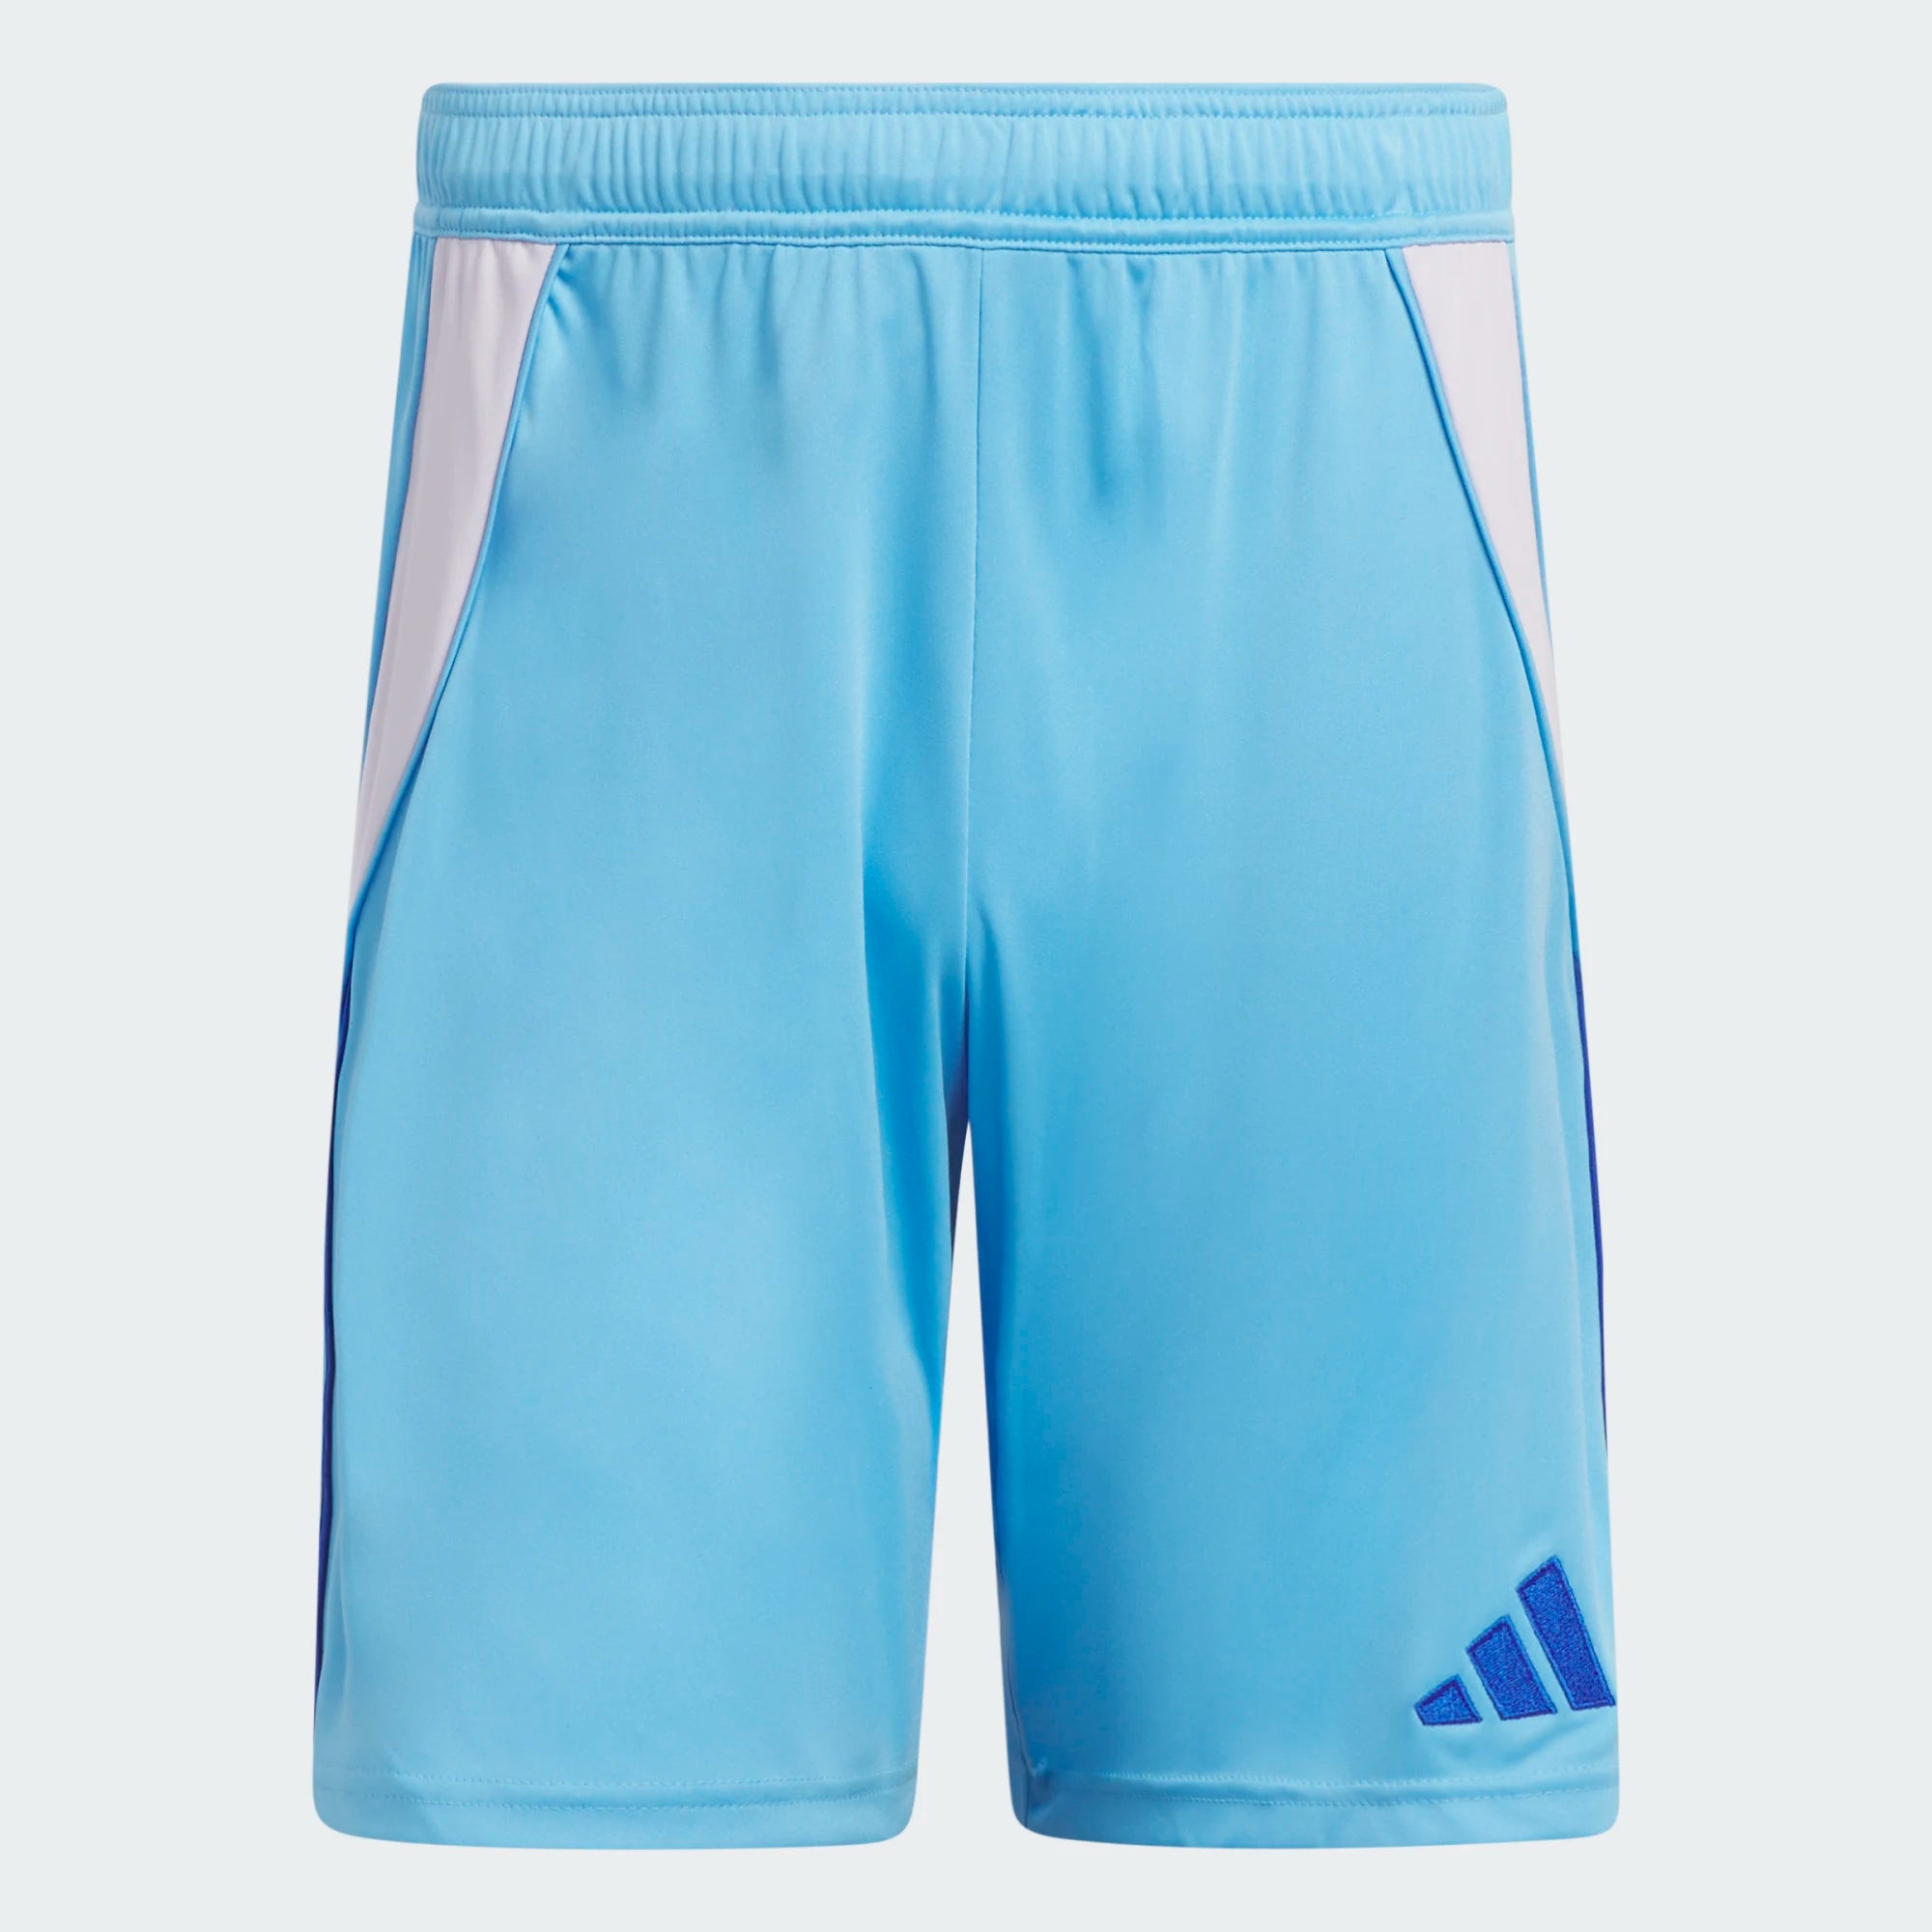 Adidas Tiro 24 Goal Keeper Shorts